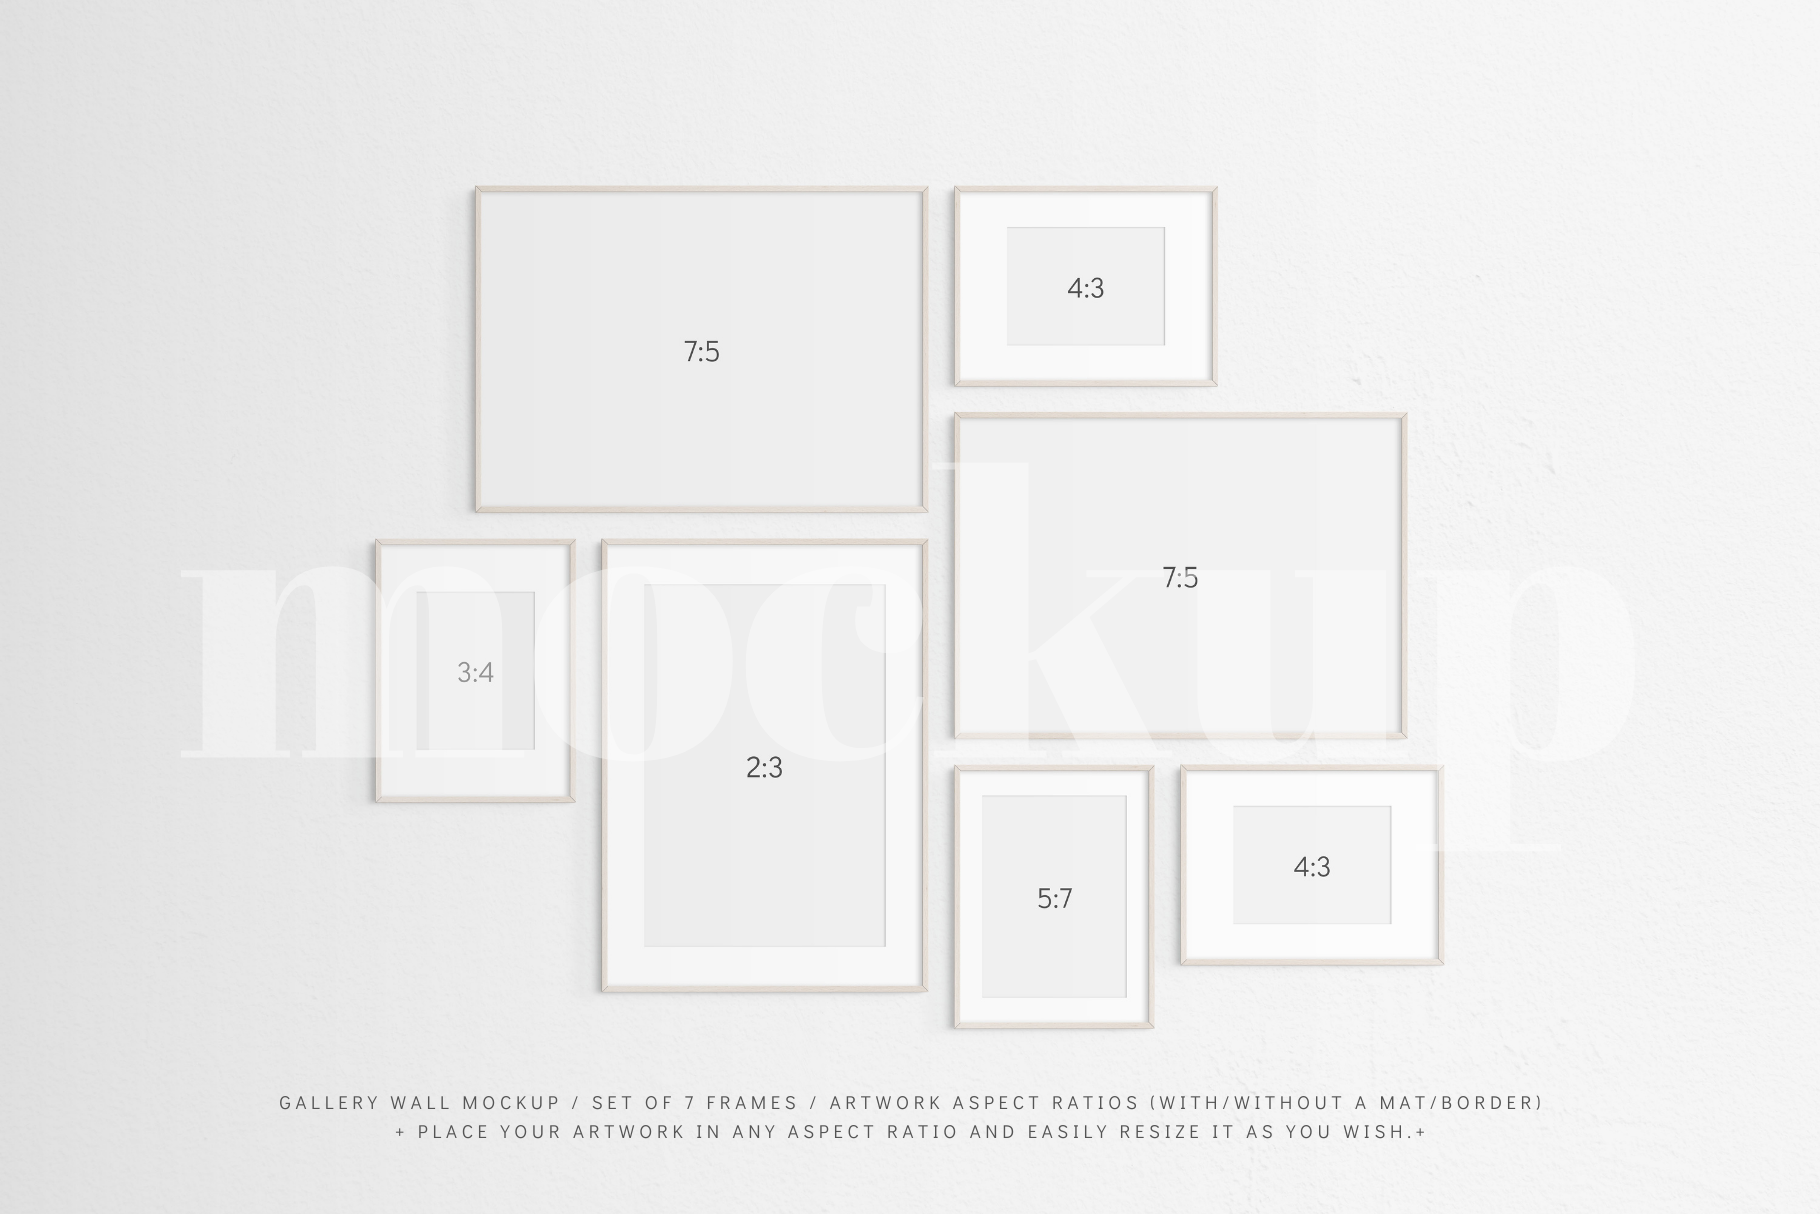 Gallery Wall Mockup | Set of 7 Frames | Frame Mockup | Light Wood | PSD